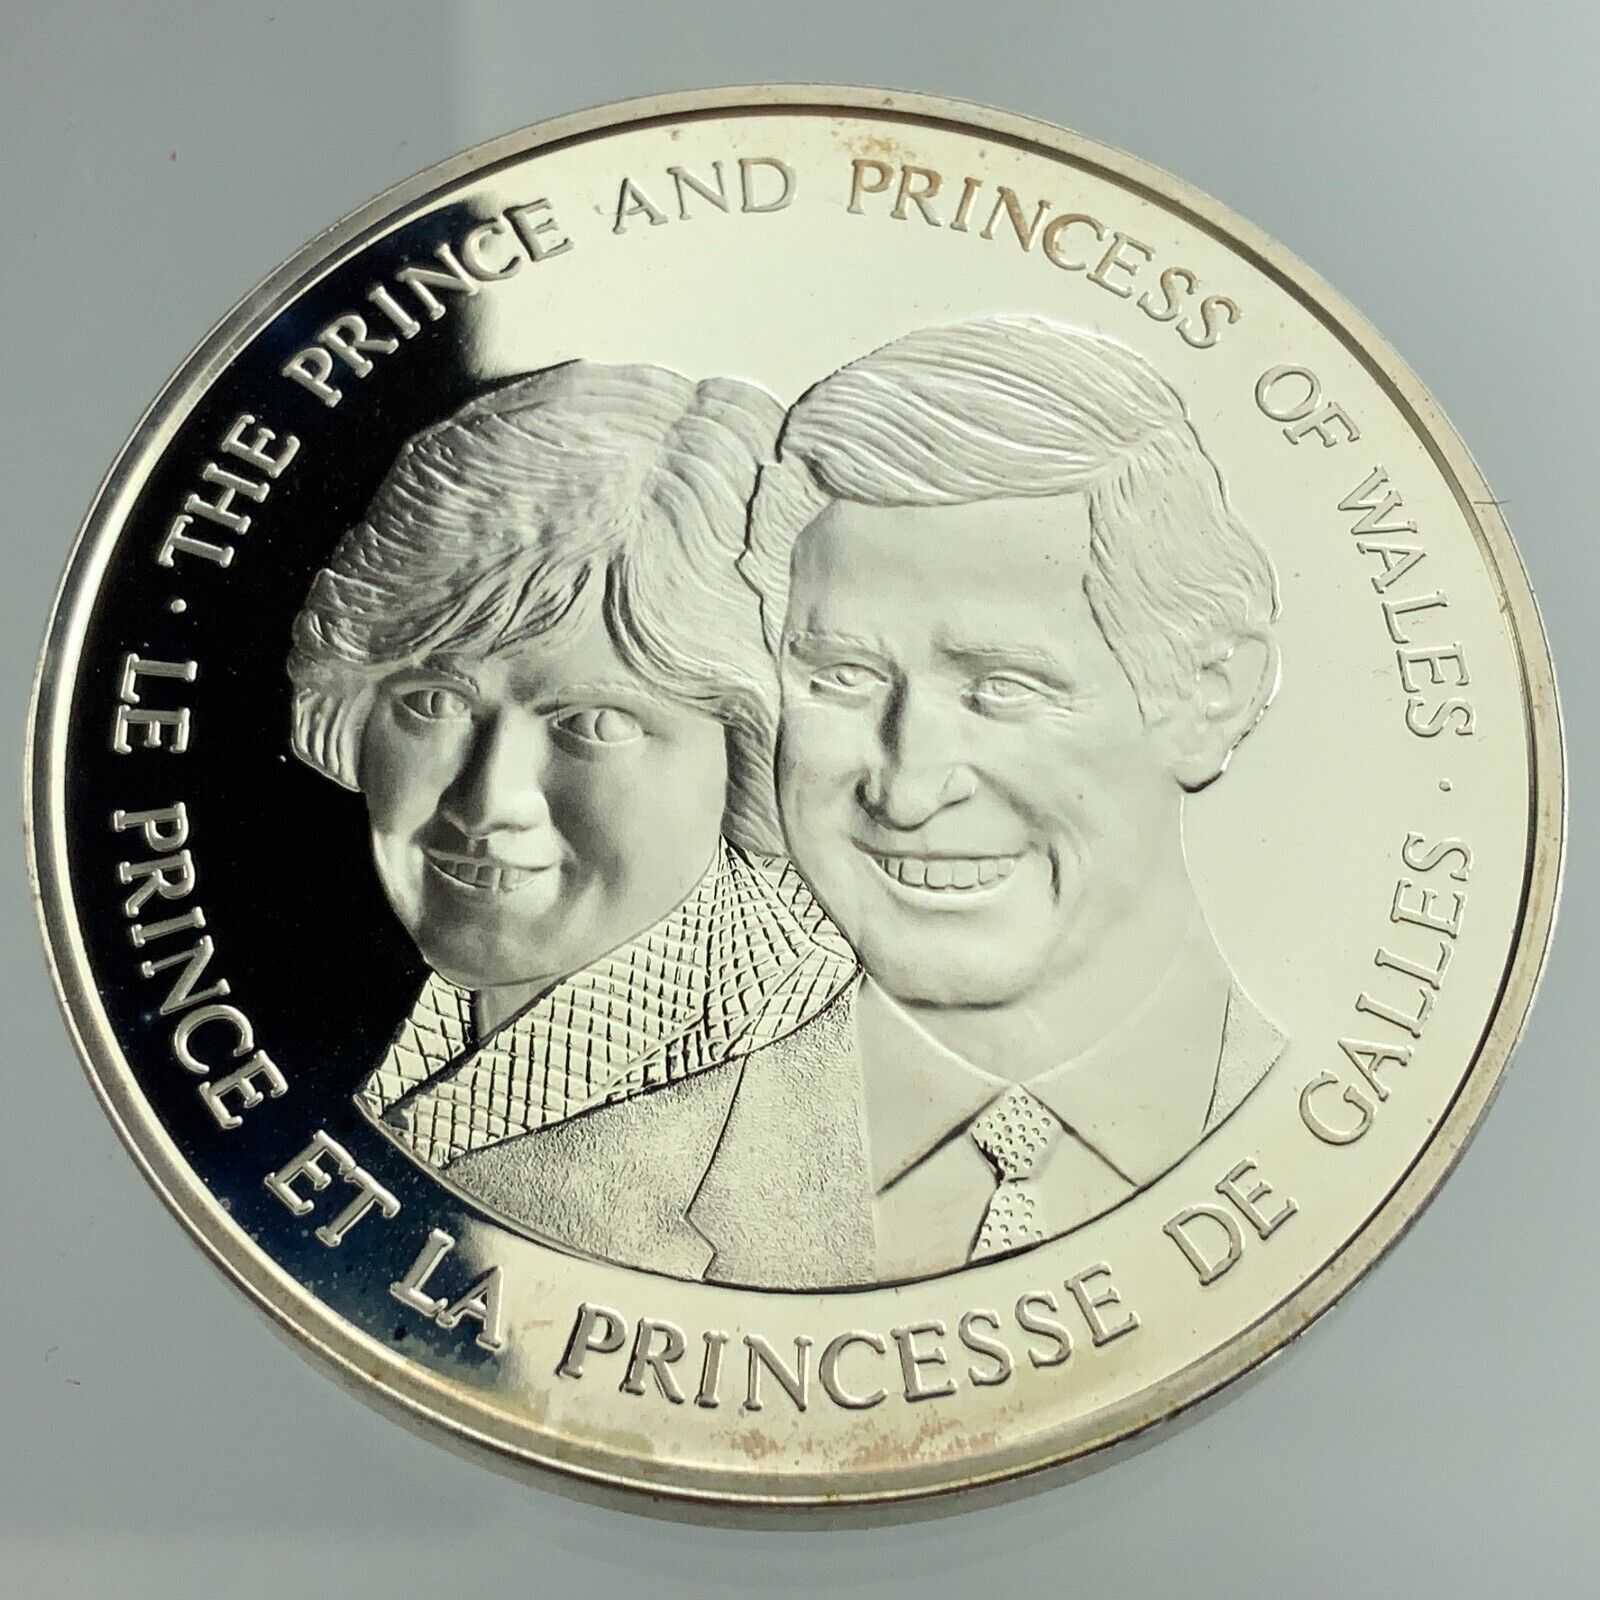 Prince and Princess of Wales Charles Diana June 1983 Canada Silver Medal B588